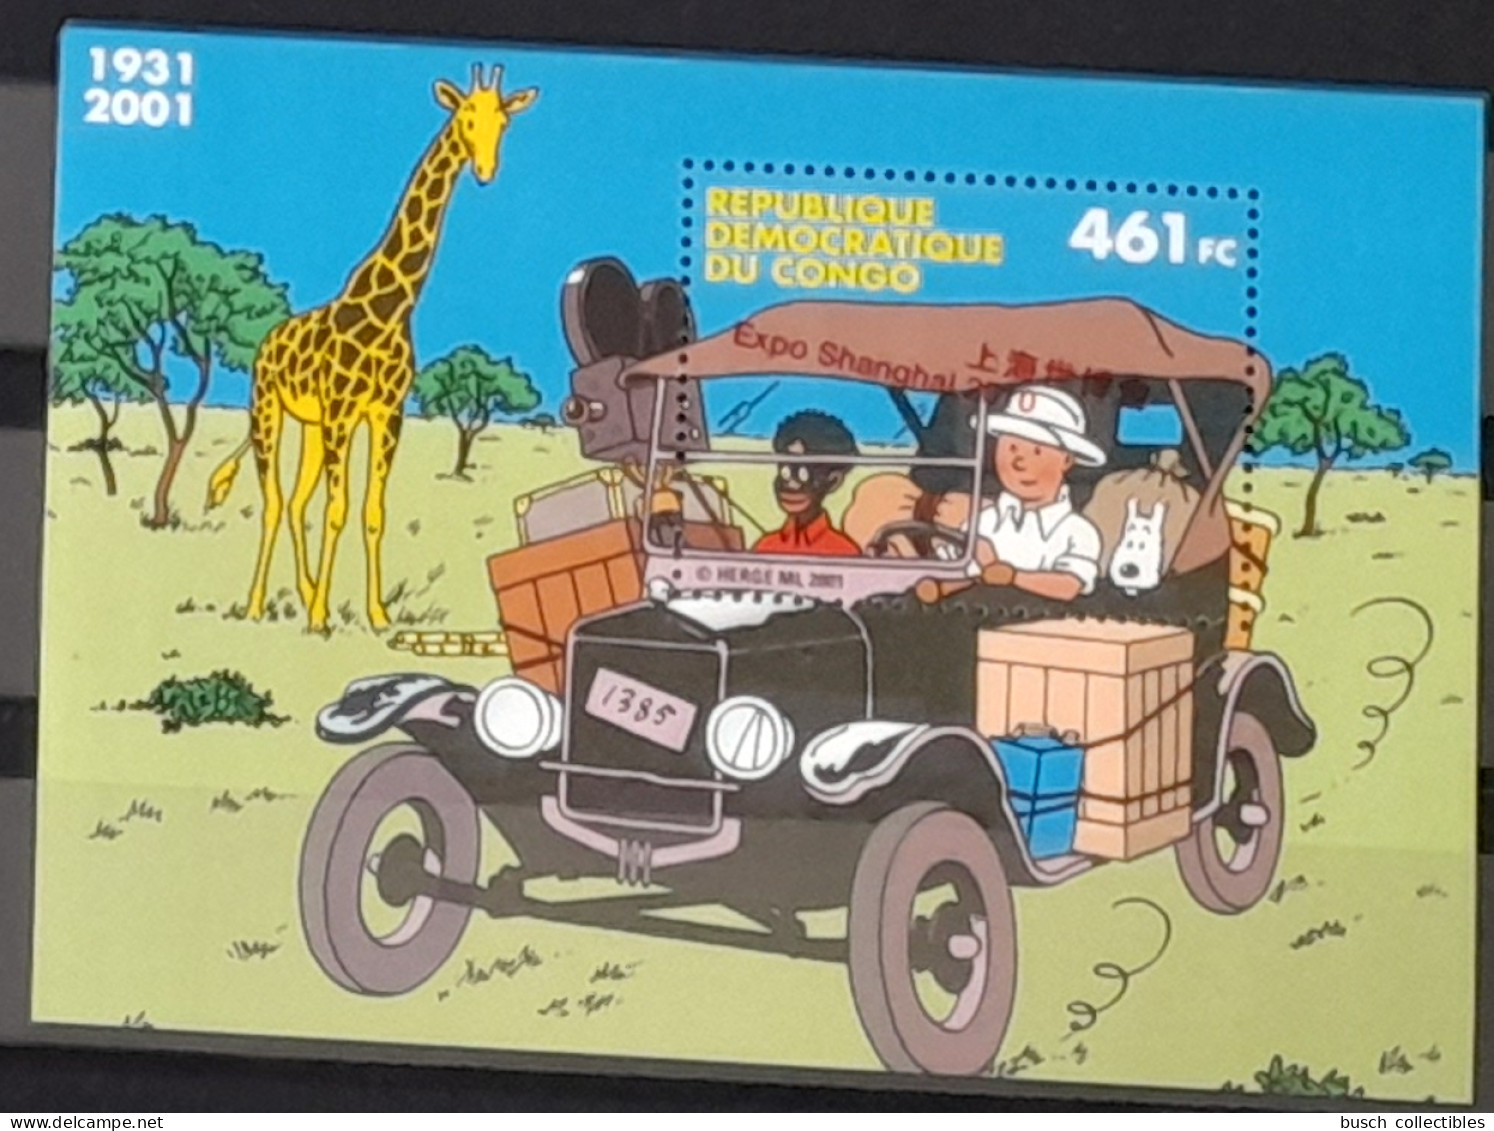 Congo Kinshasa 2010 Mi. Bl. ? VARIETE SURCHARGE OBLIQUE Overprint Tintin Joint Issue Girafe Expo Shanghai Hergé - Ongebruikt